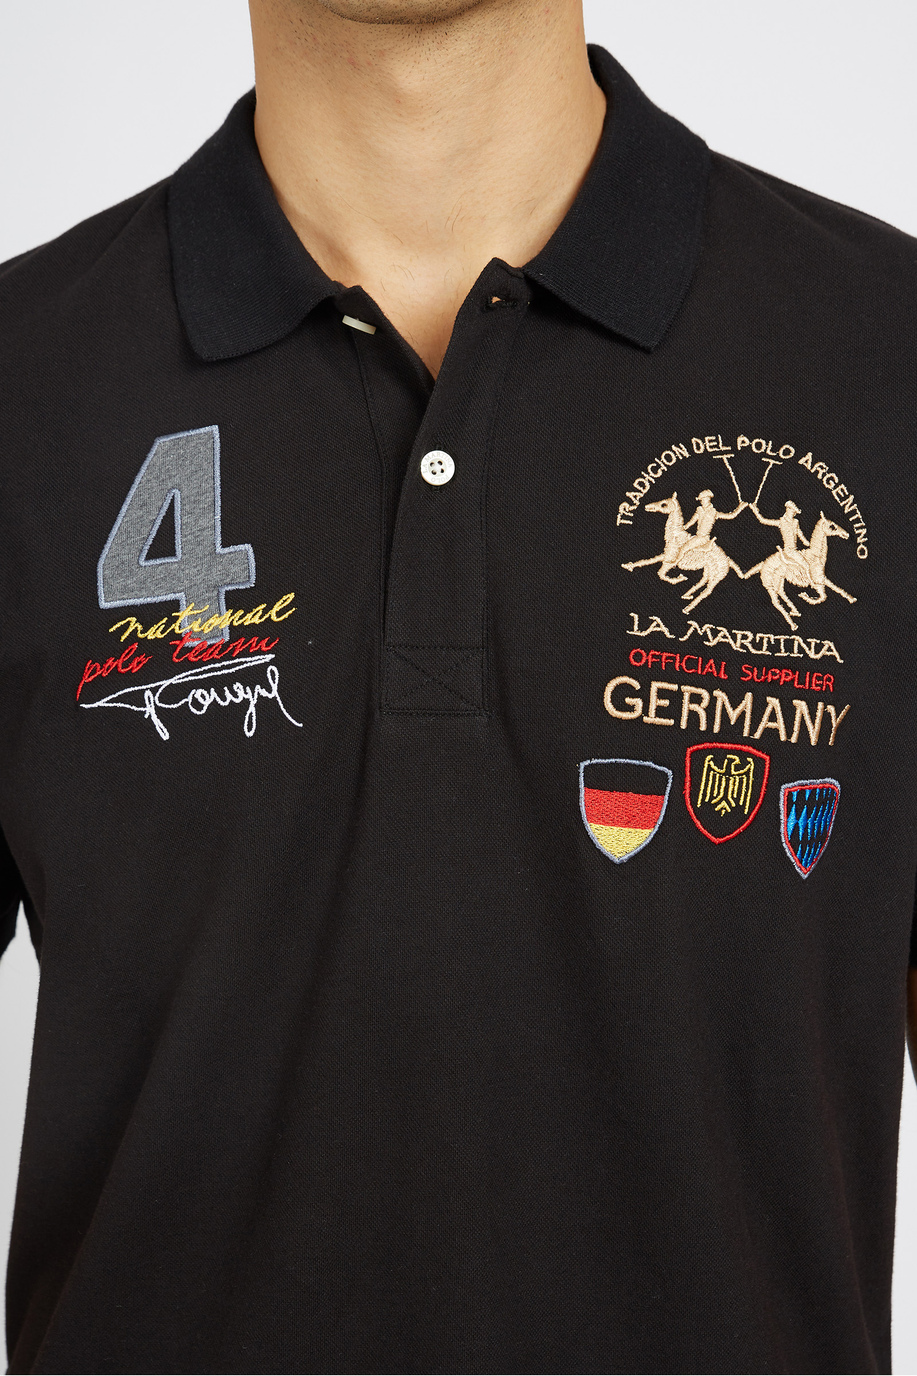 Herren-Kurzarm-Poloshirt aus Stretch-Baumwolle mit normaler Passform - Vaughn - Poloshirts | La Martina - Official Online Shop